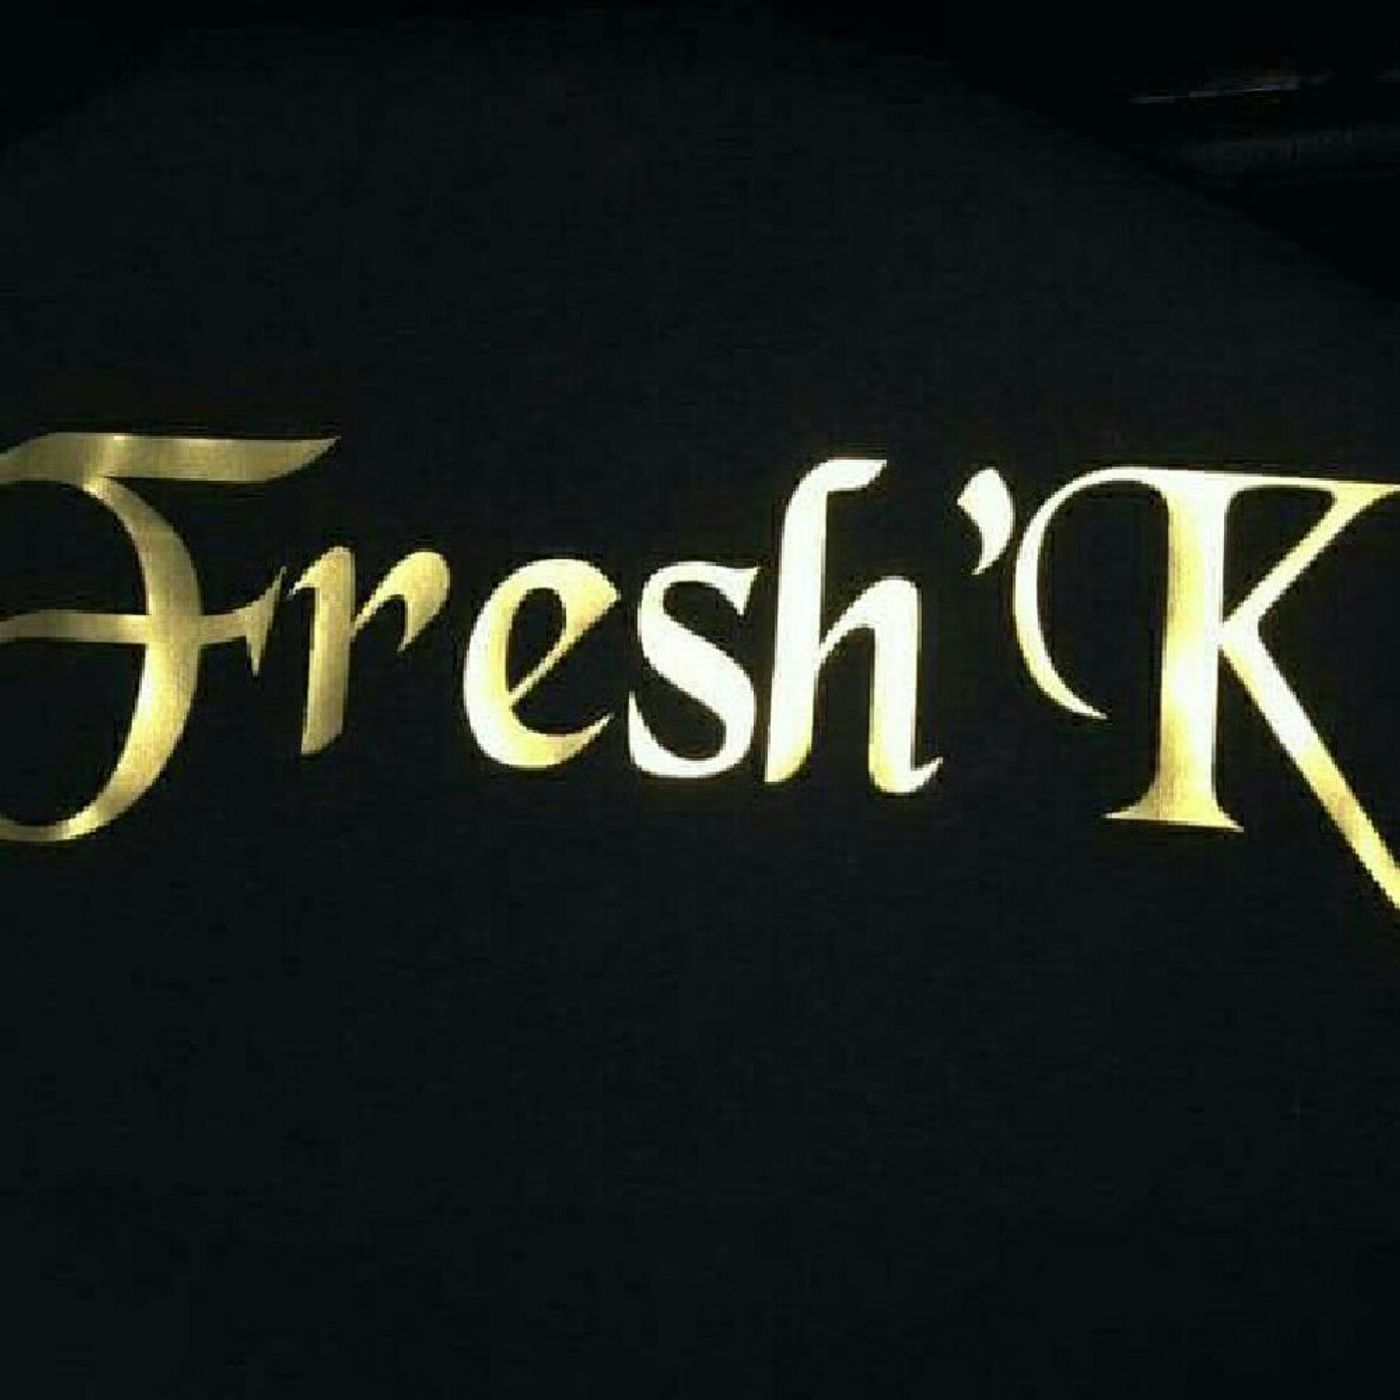 Bmd Fresh'k's show